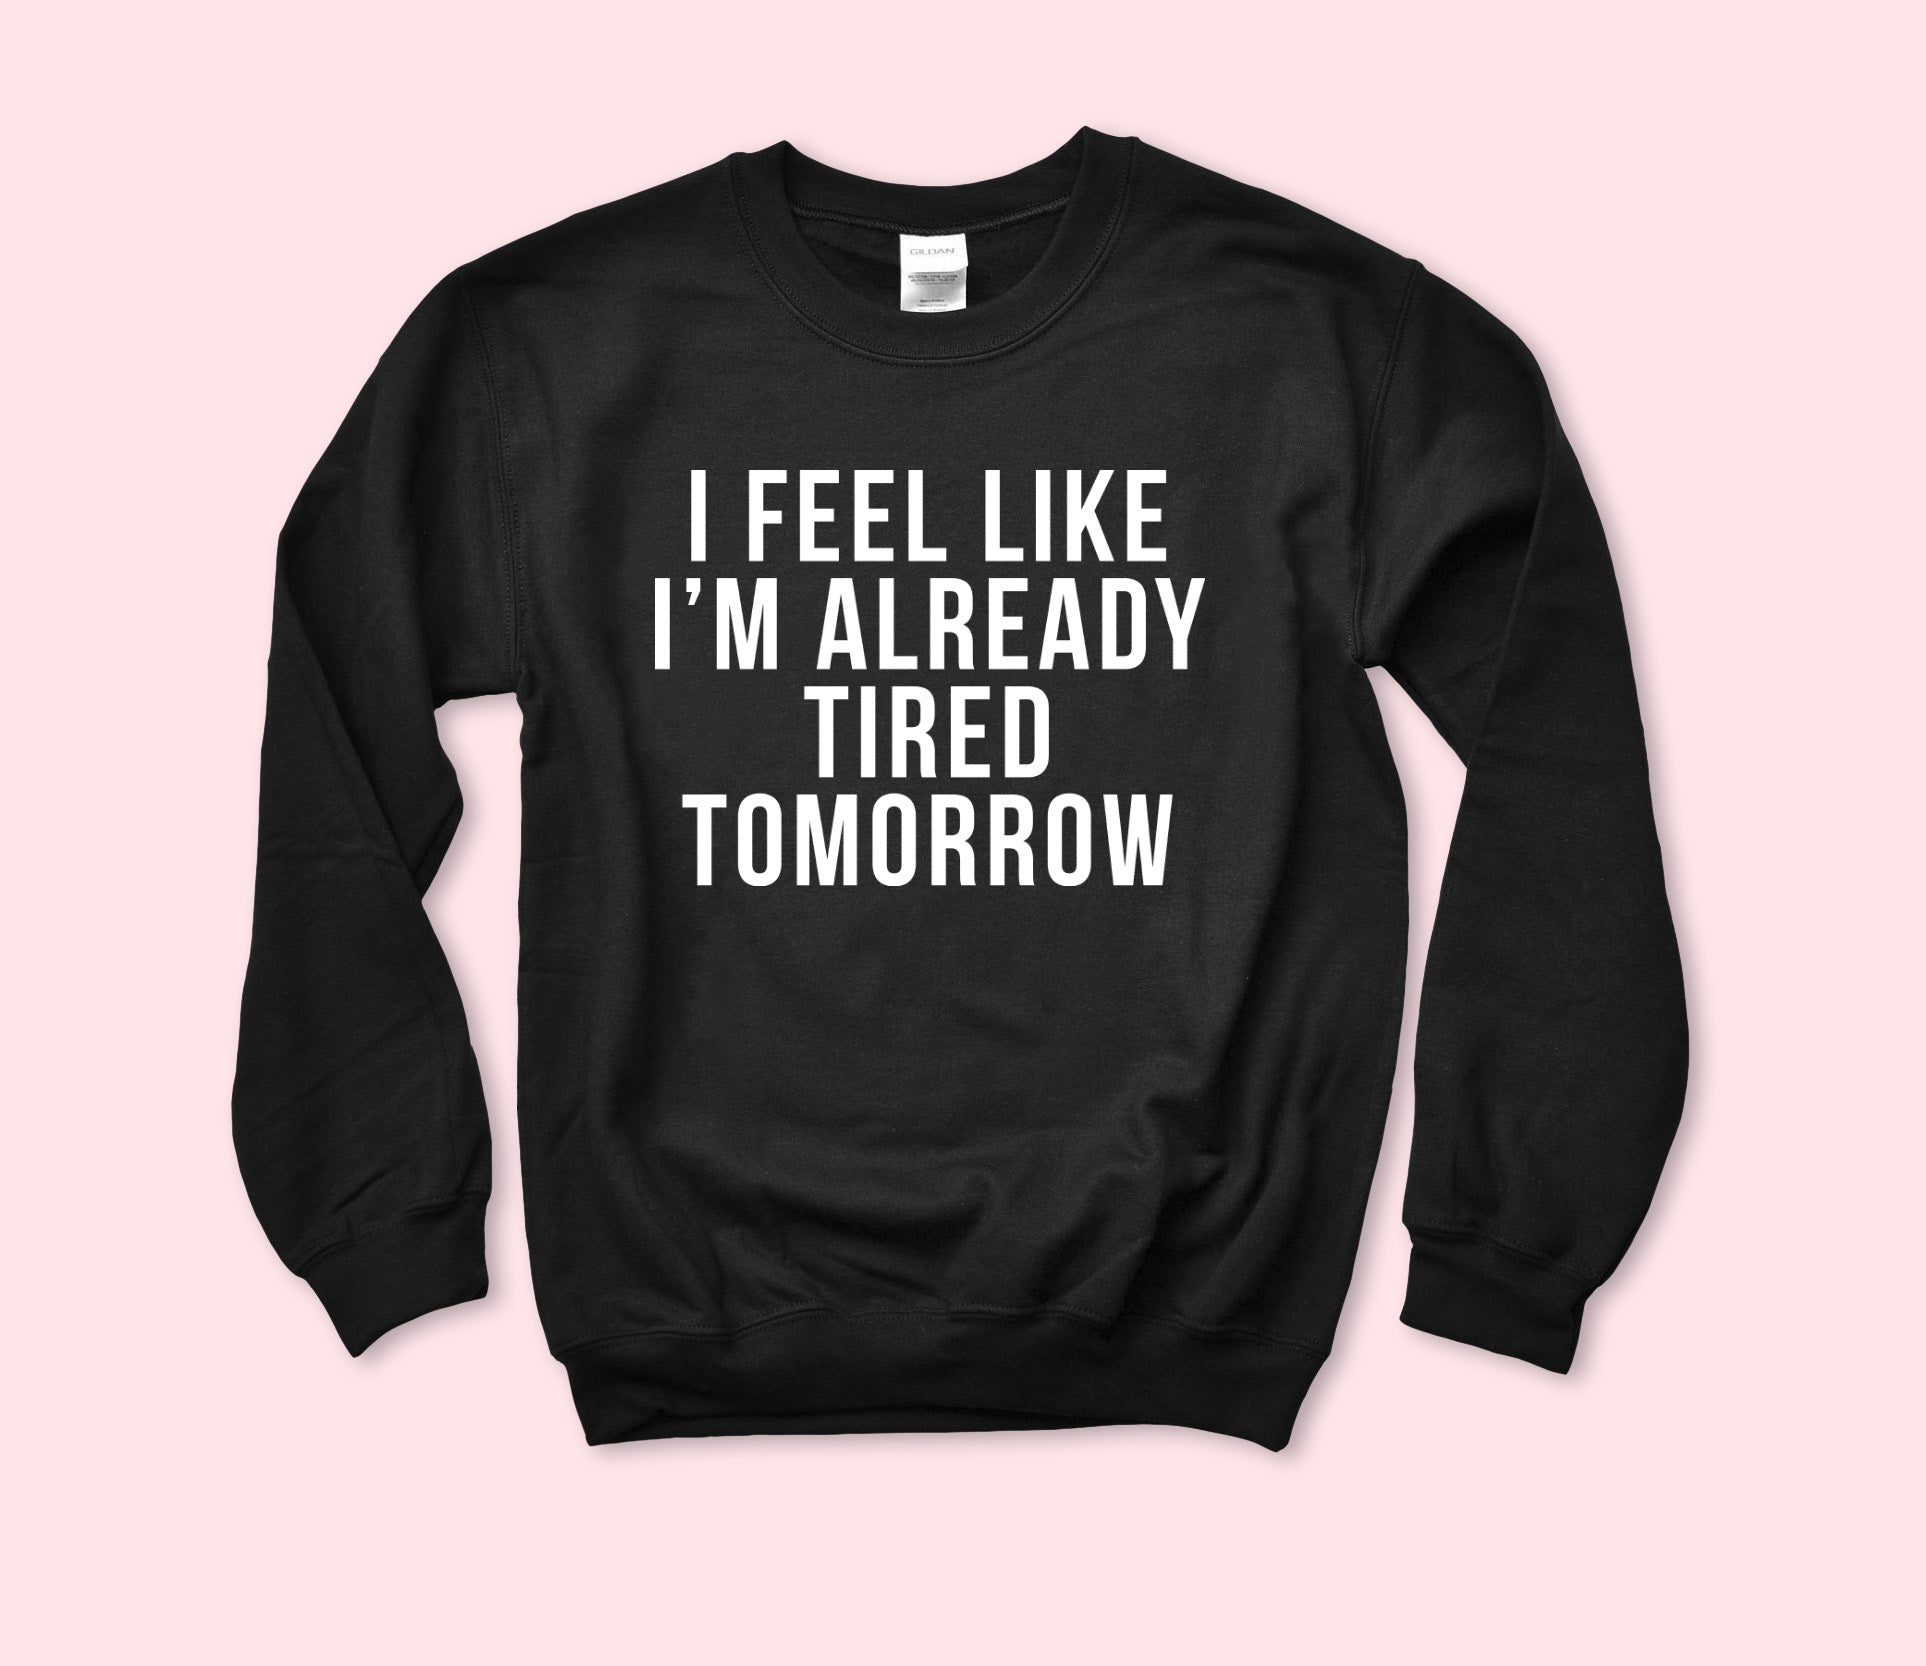 I'm Feel Like Already Tired Tomorrow Sweatshirt